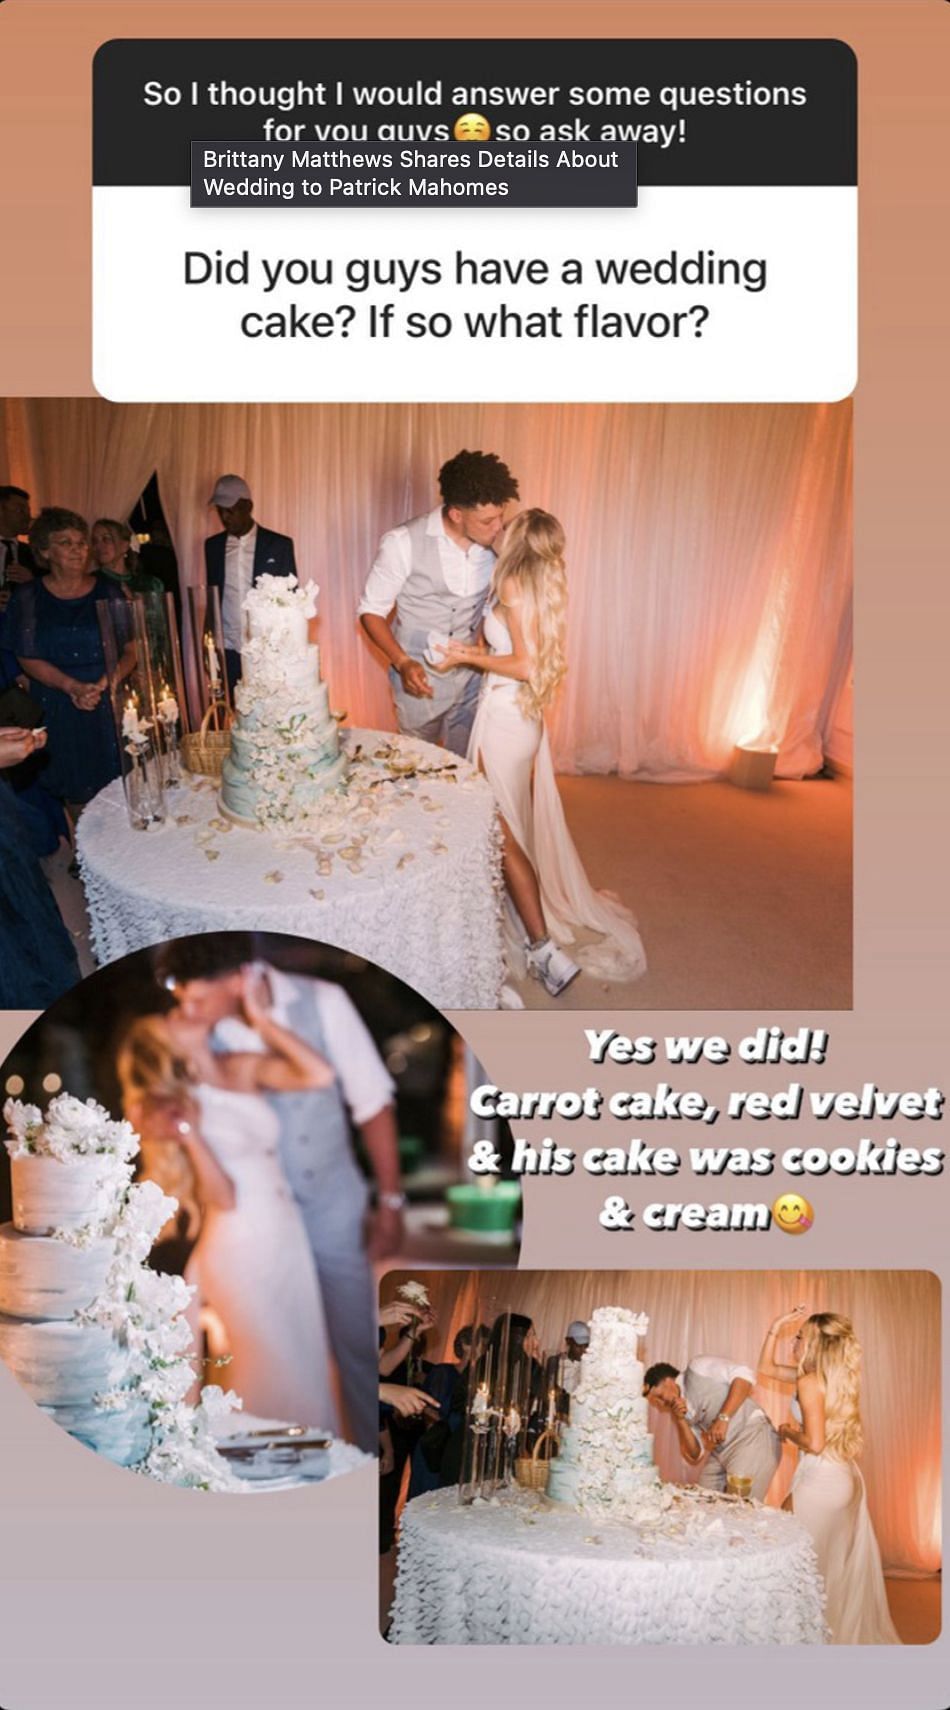 The couple enjoying their wedding cake. Source: Brittany Lynne/Instagram